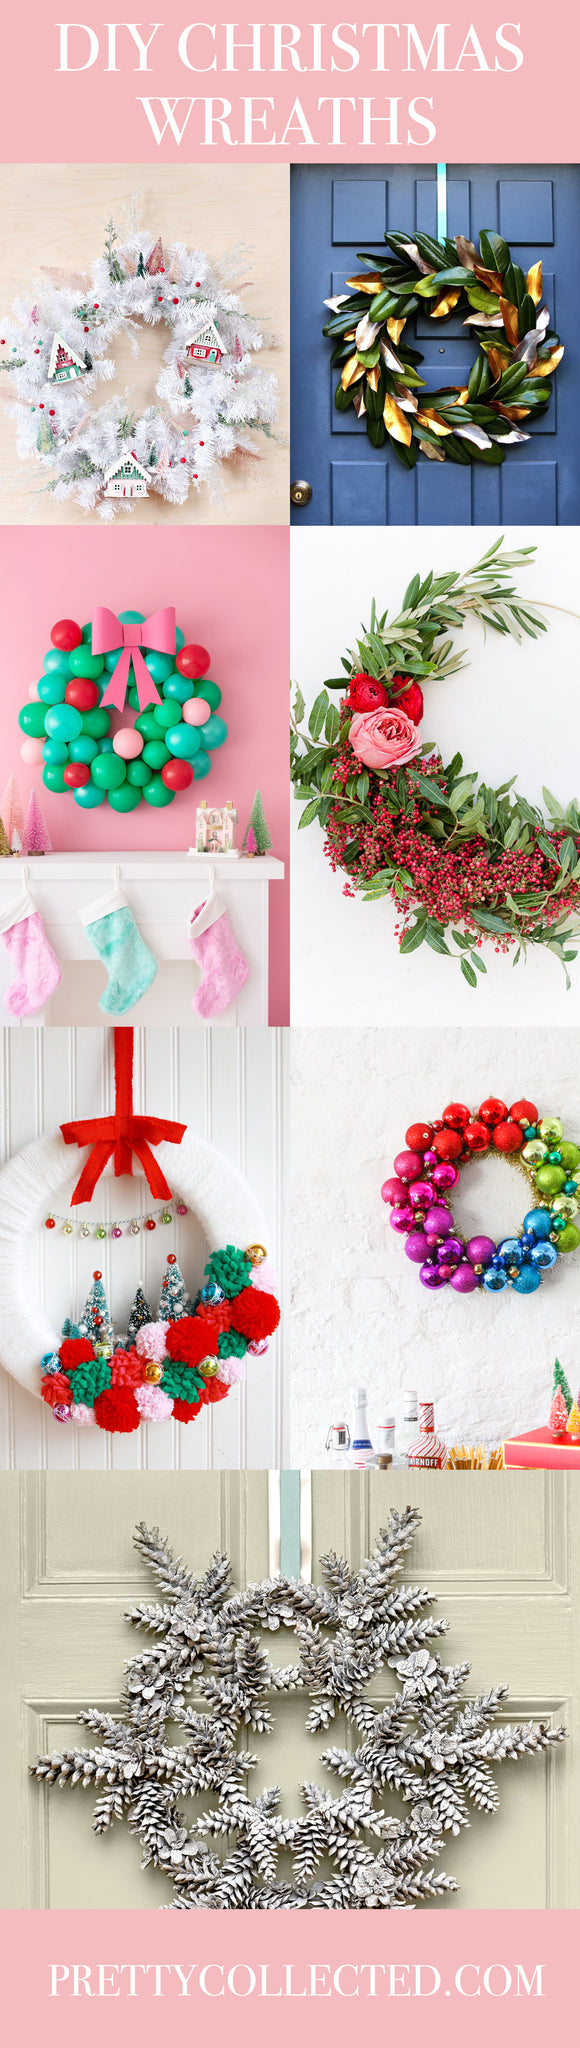 DIY Christmas Wreaths - 10 Best DIY Christmas Wreaths - Pretty Collected